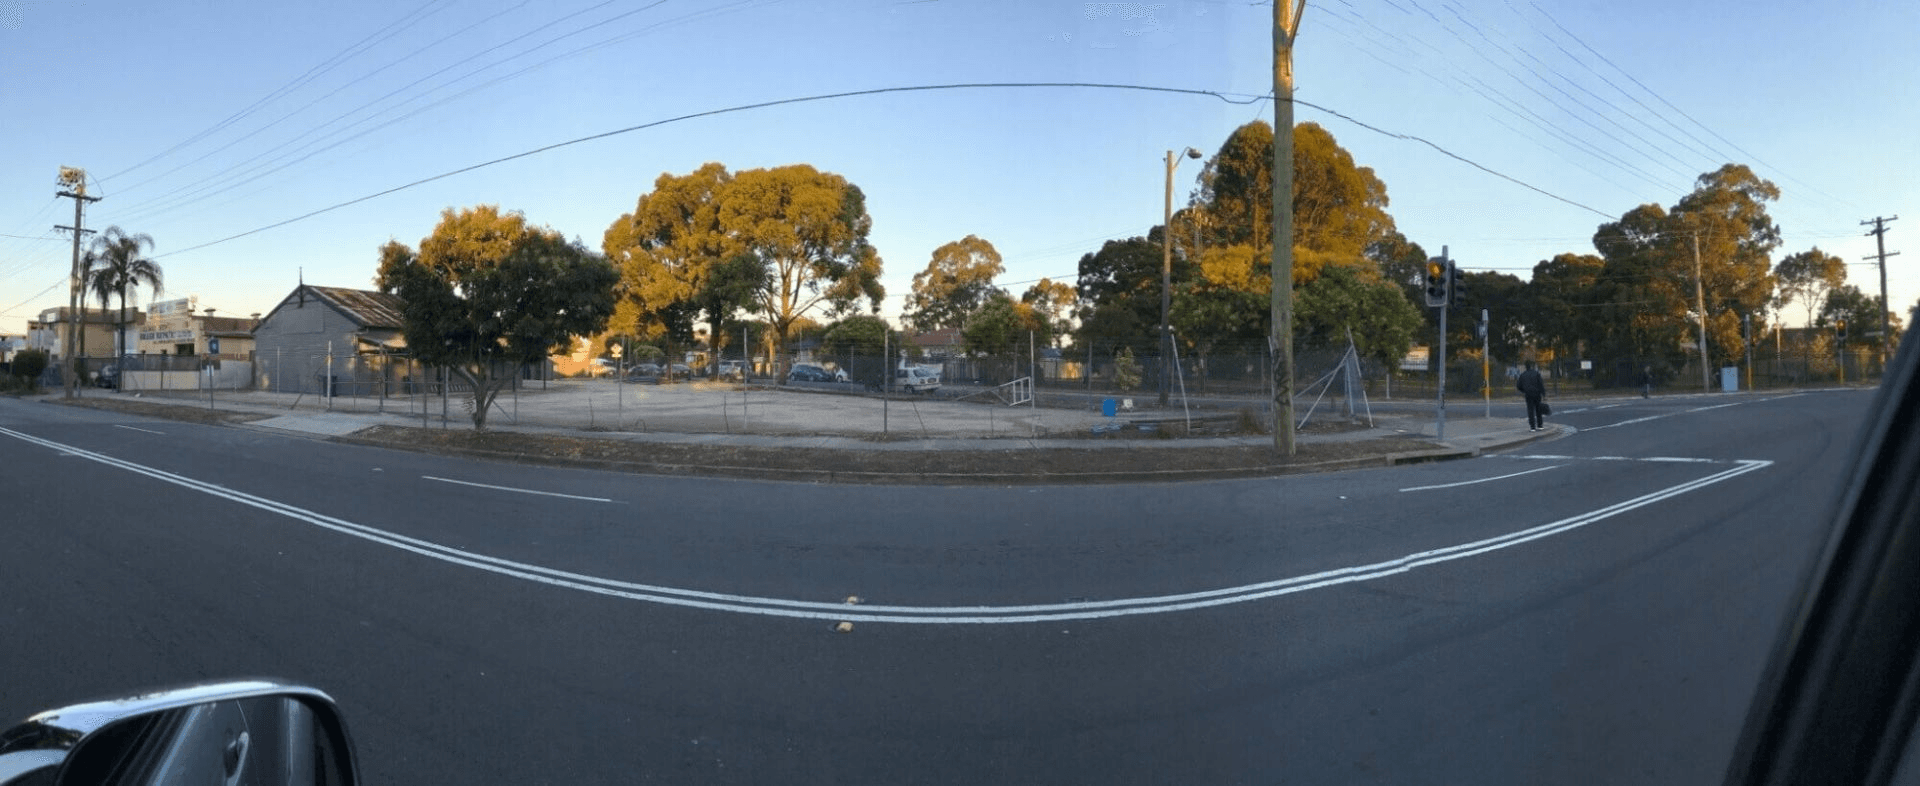 80 Railway Street, Yennora, NSW 2161